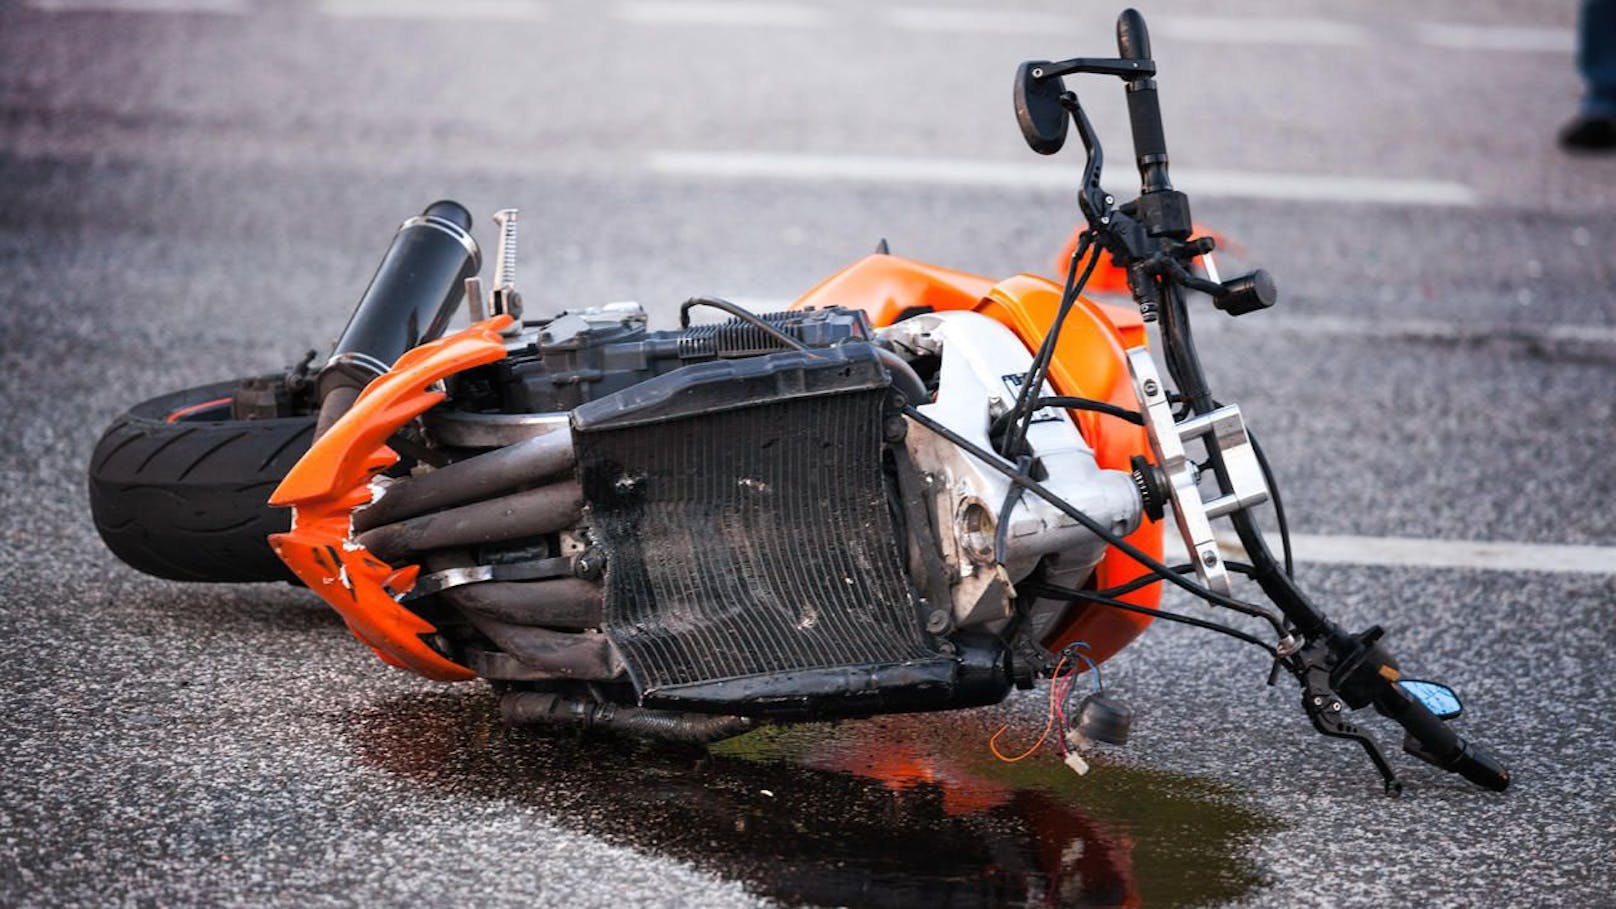 Der Biker erlitt bei dem Unfall tödliche Verletzungen.